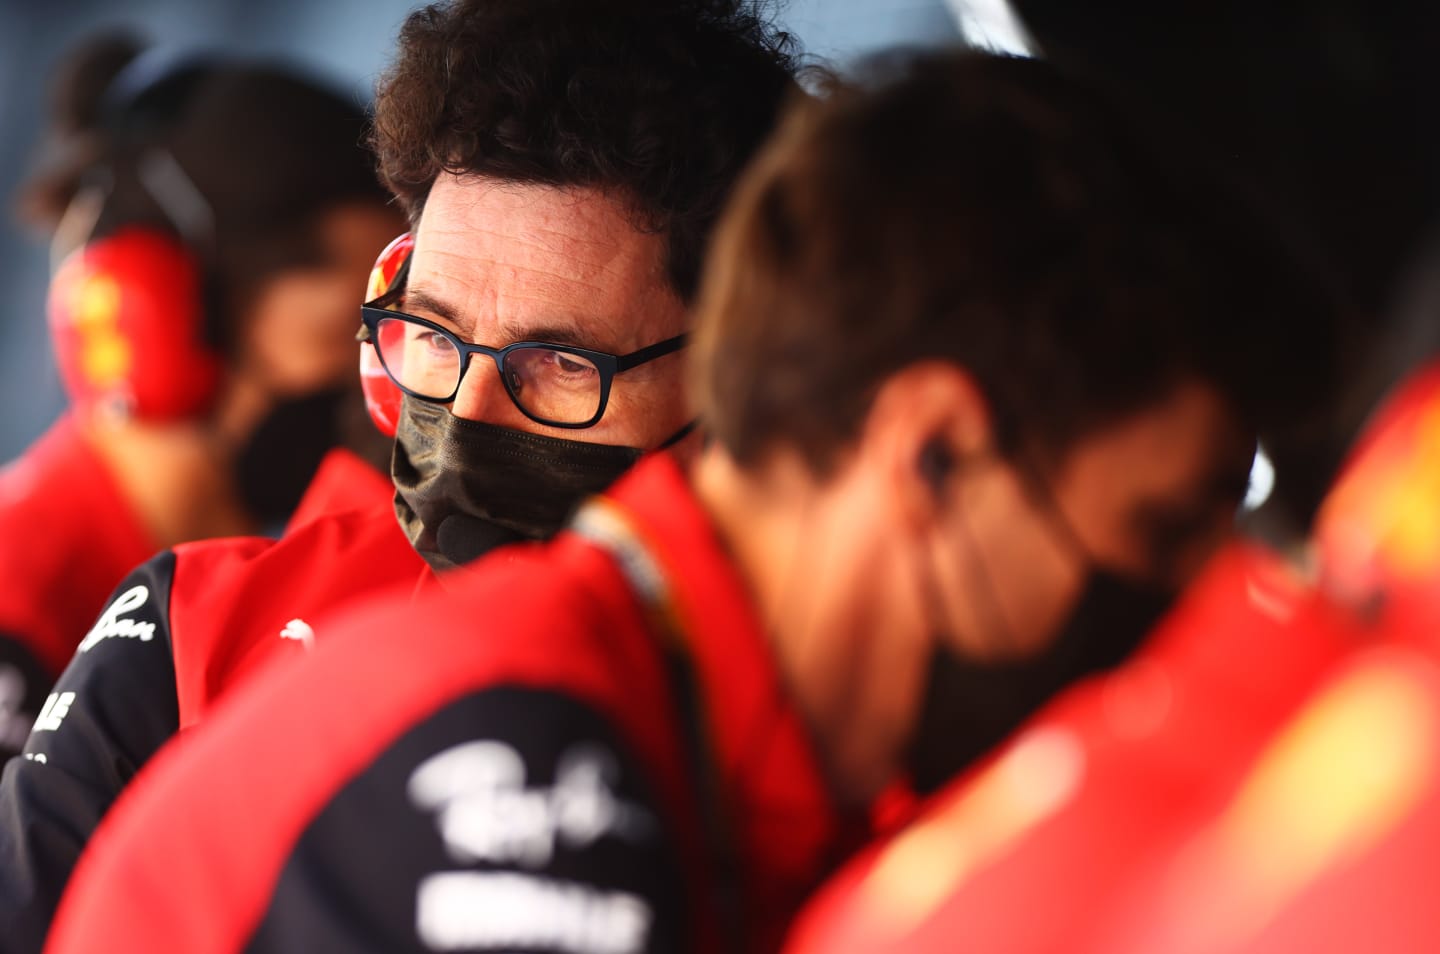 BAHRAIN, BAHRAIN - MARCH 19: Scuderia Ferrari Team Principal Mattia Binotto looks on from the